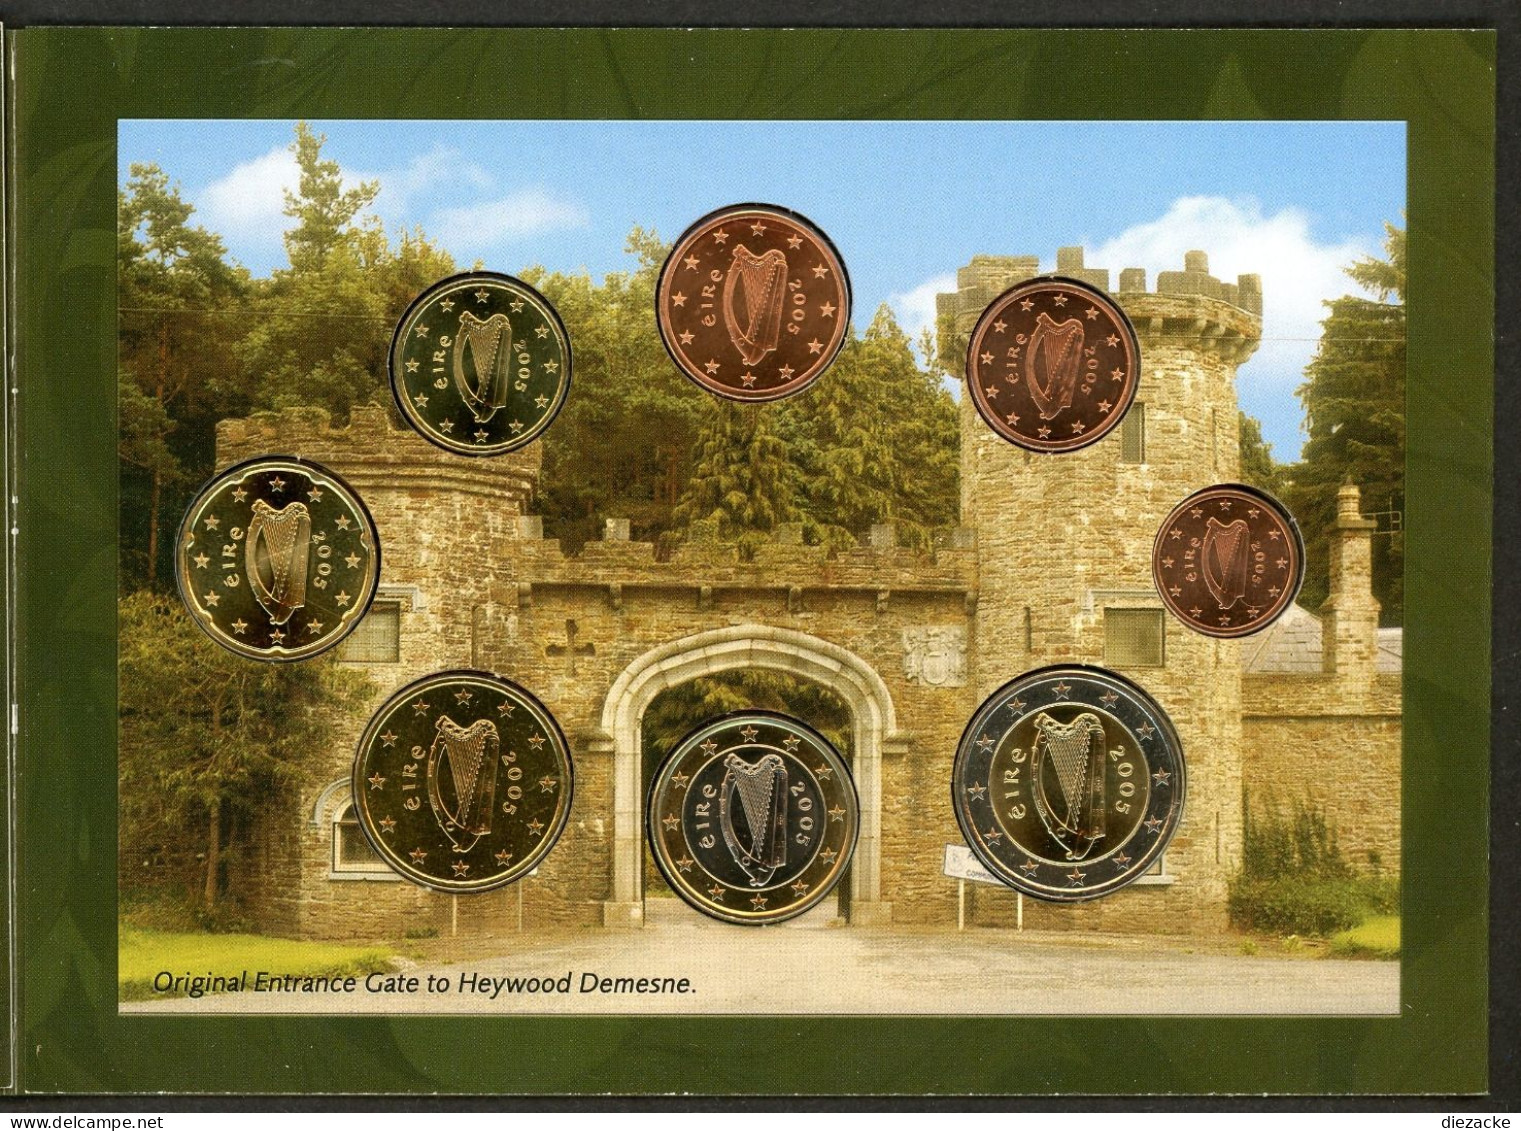 Irland 2005 Kursmünzensatz/ KMS Im Folder Heywood Gardens ST (MZ1298 - Irland